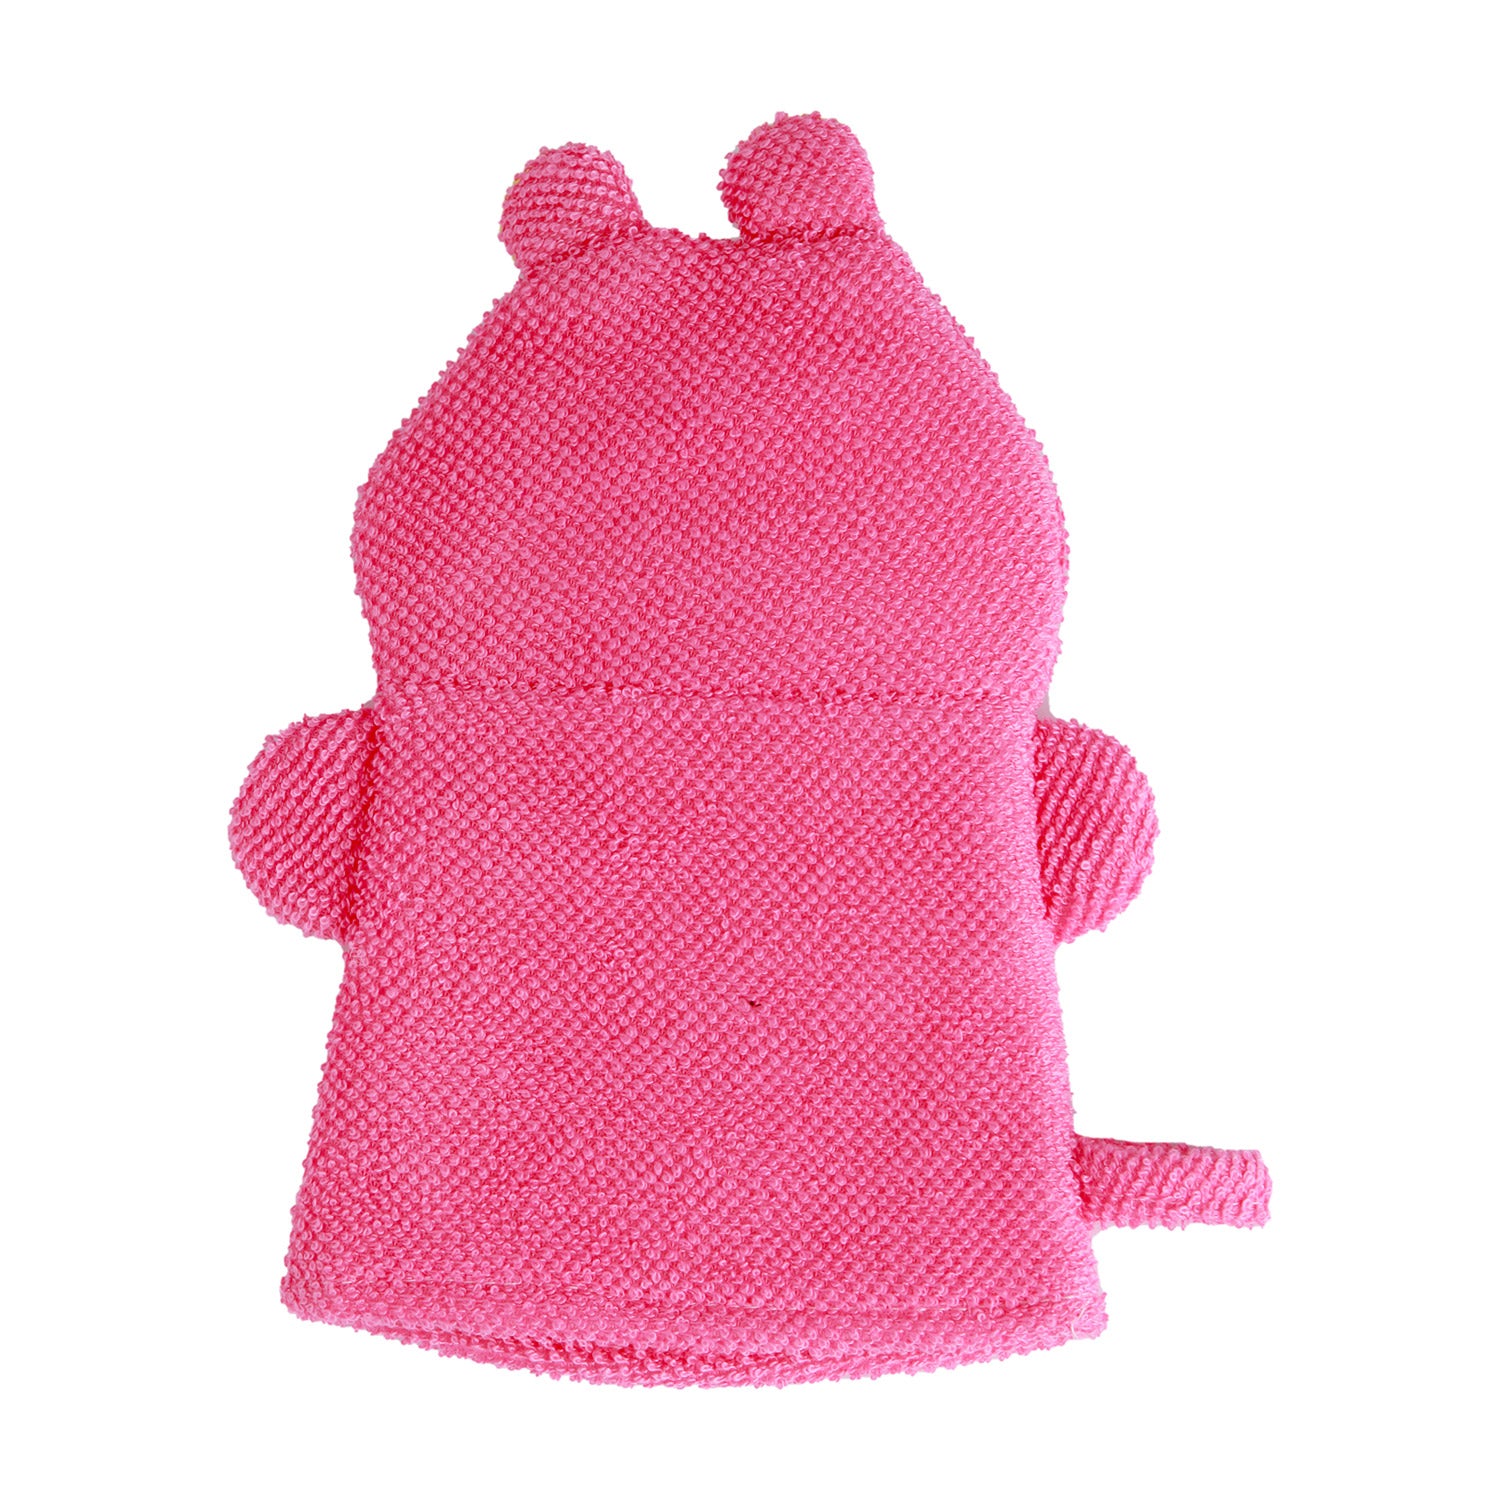 Animal Pink And Yellow Cartoon Bath Glove - Baby Moo